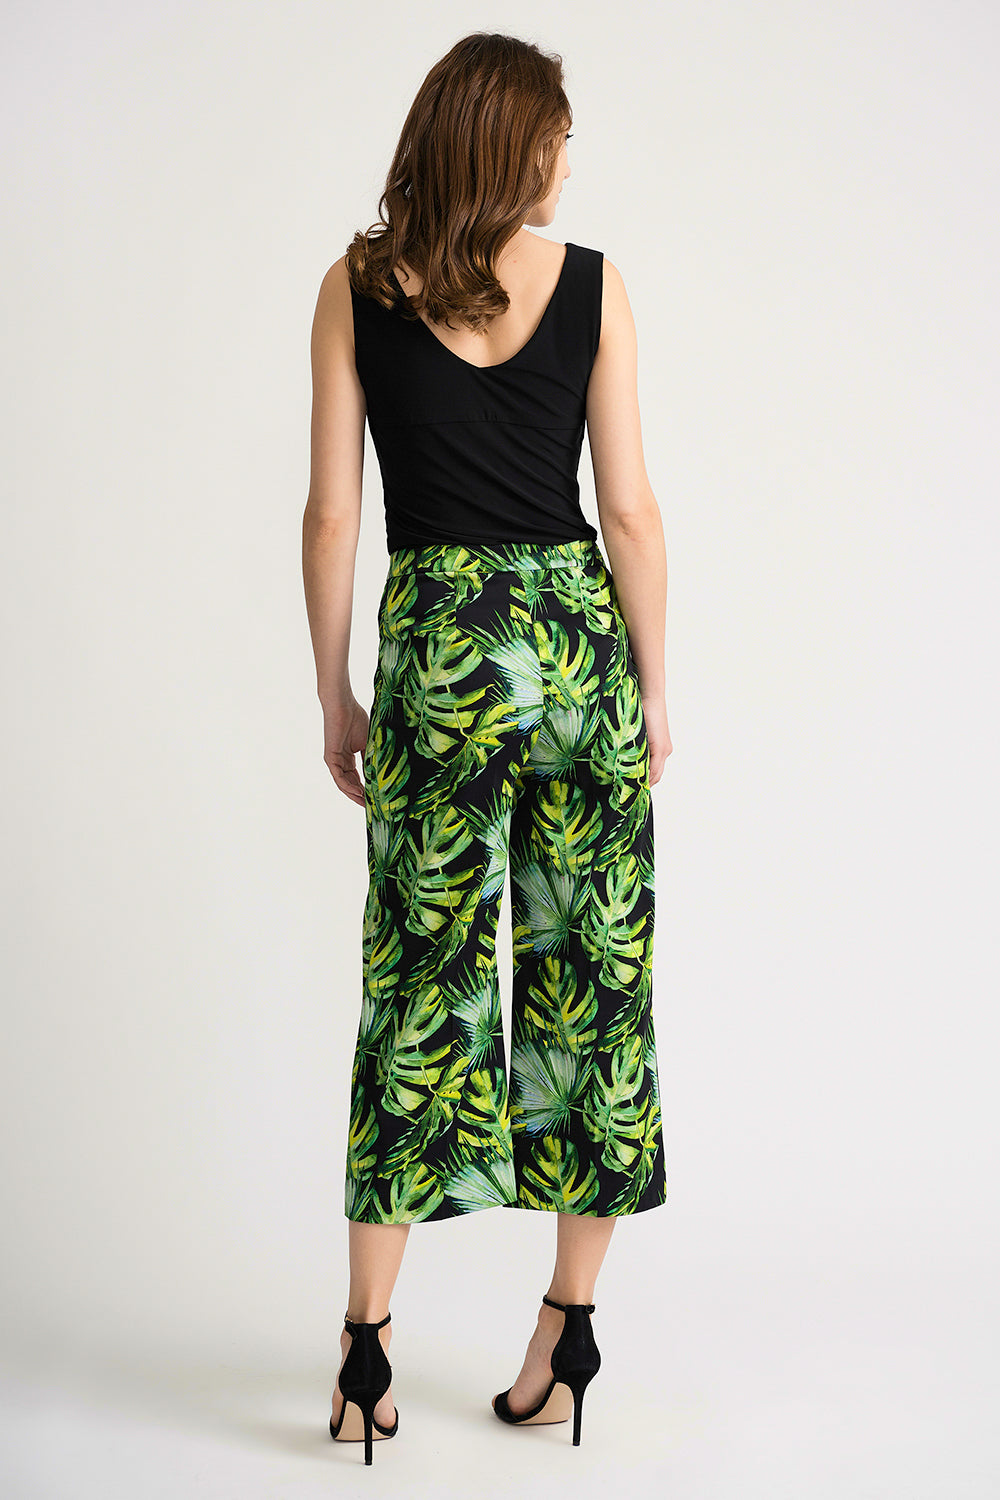 Joseph Ribkoff Black-Green-Multi Pants Style 202412